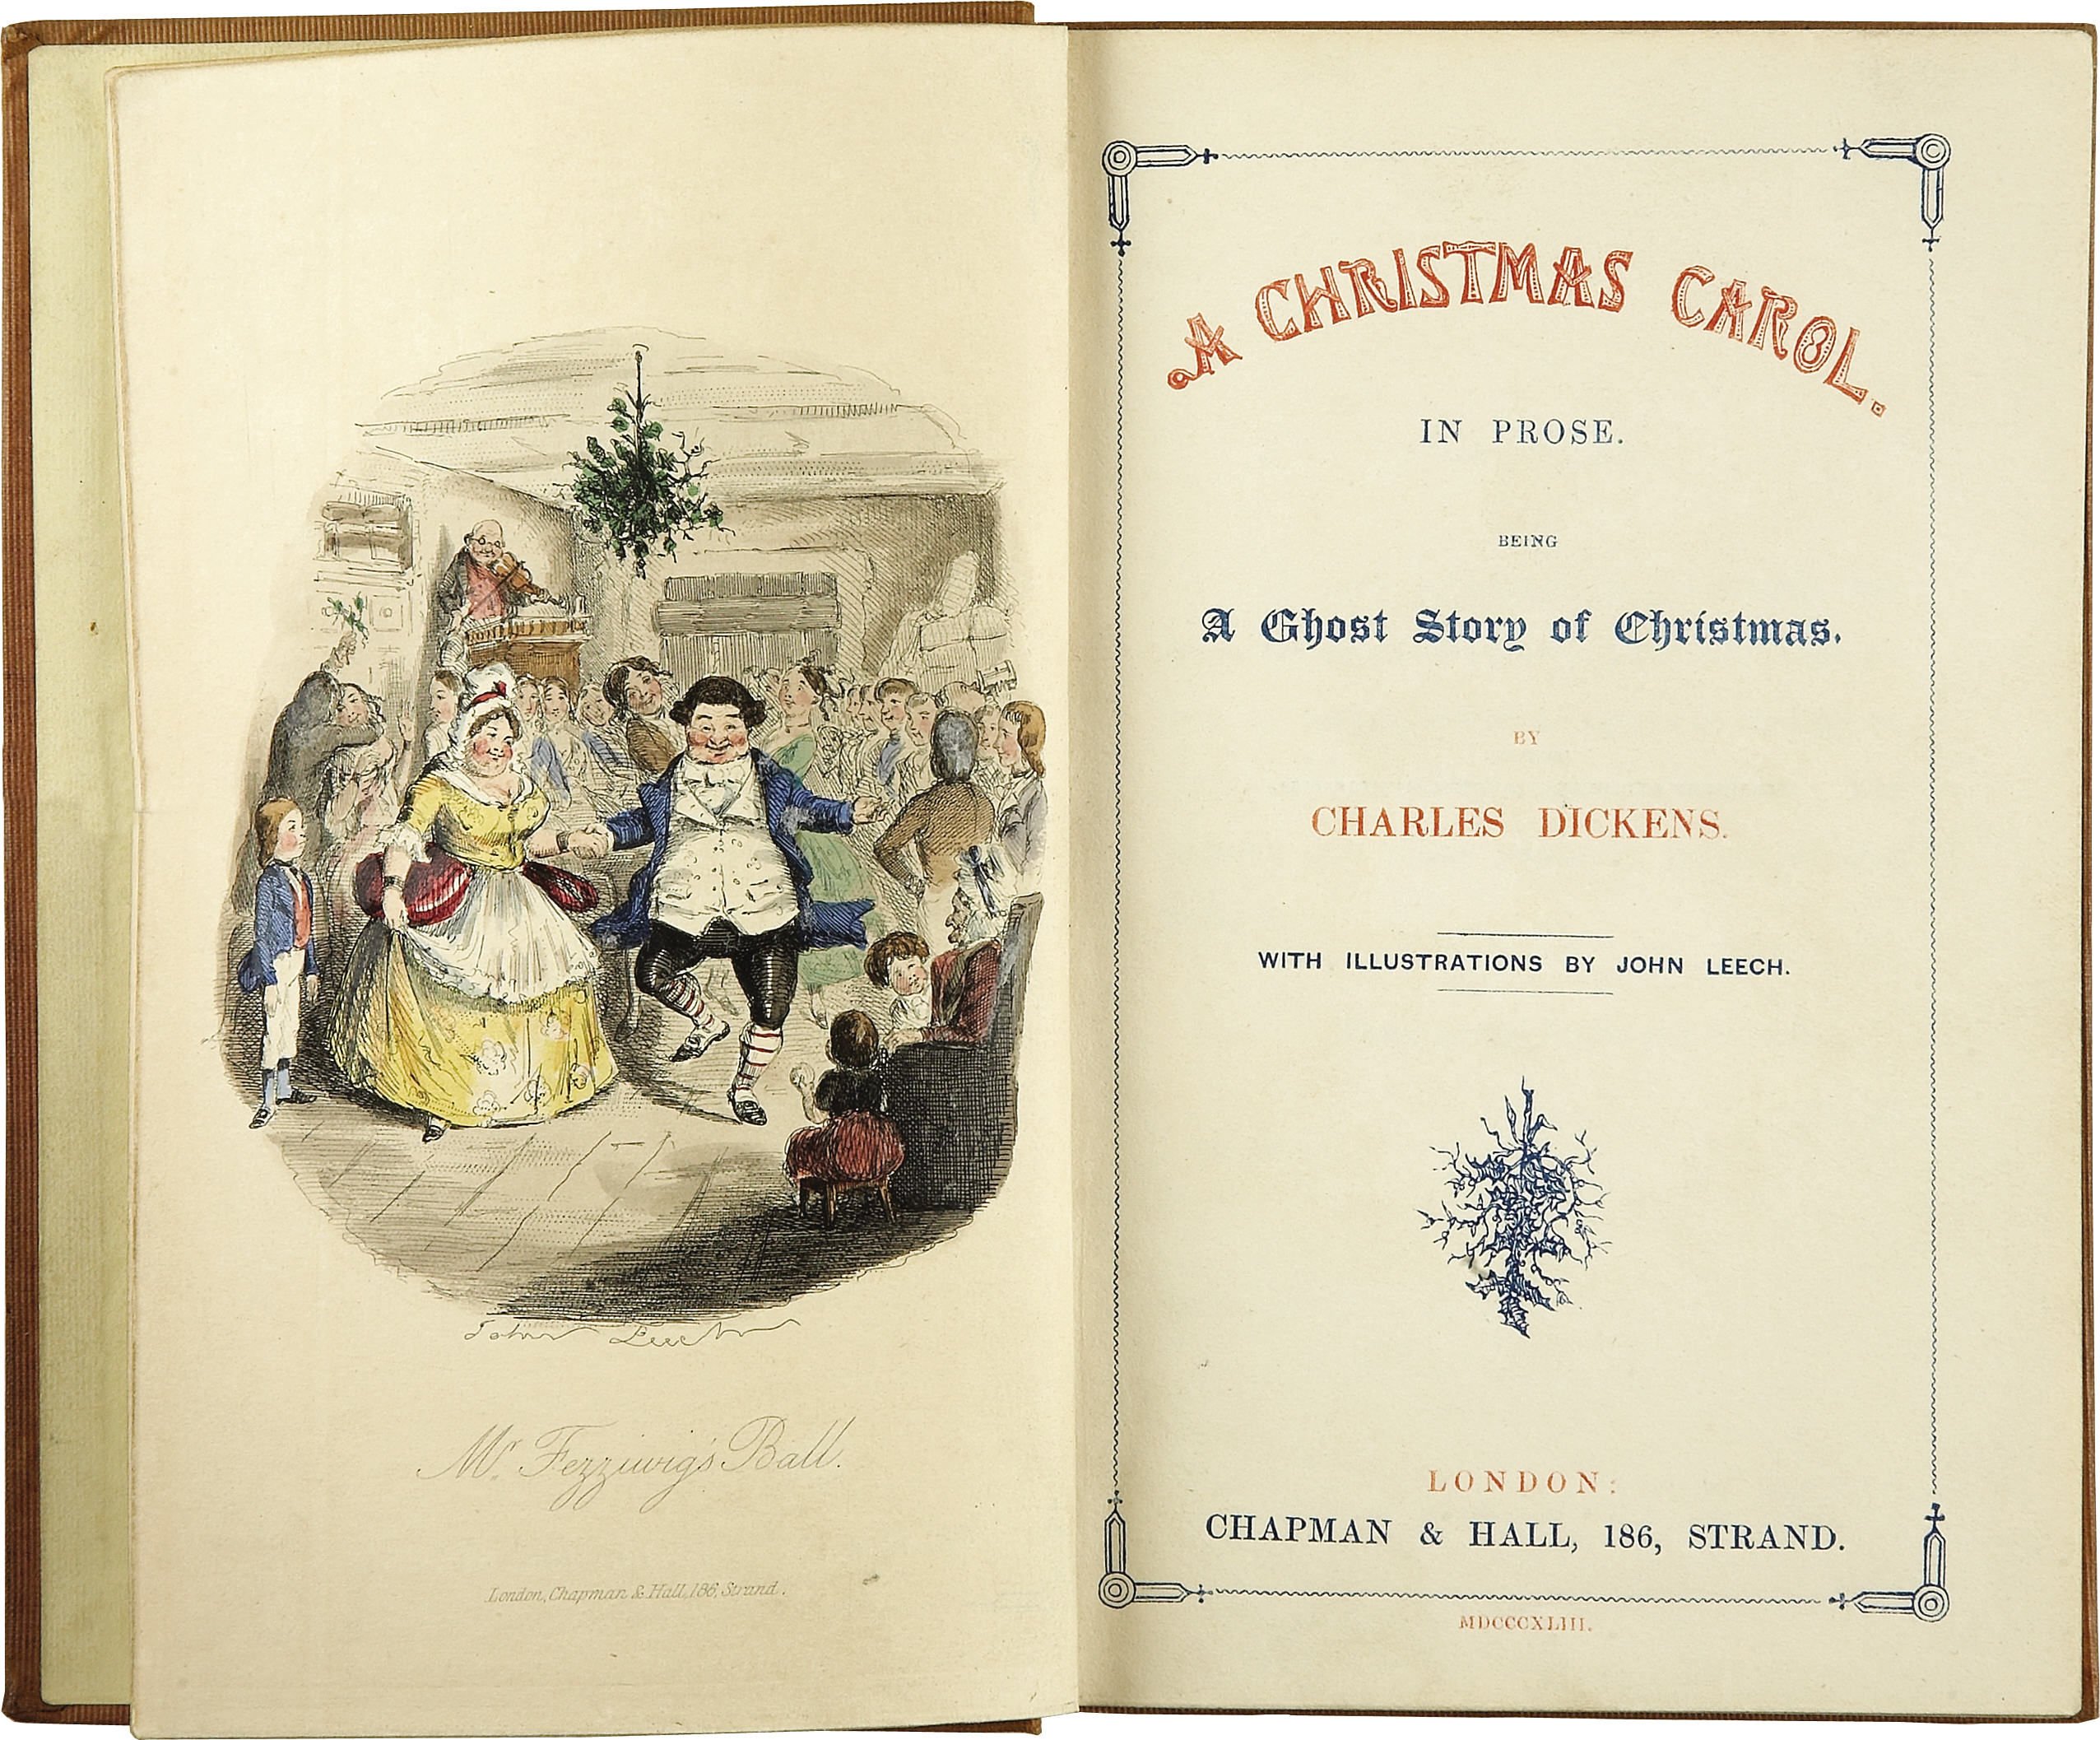 Introduction to a christmas carol essay